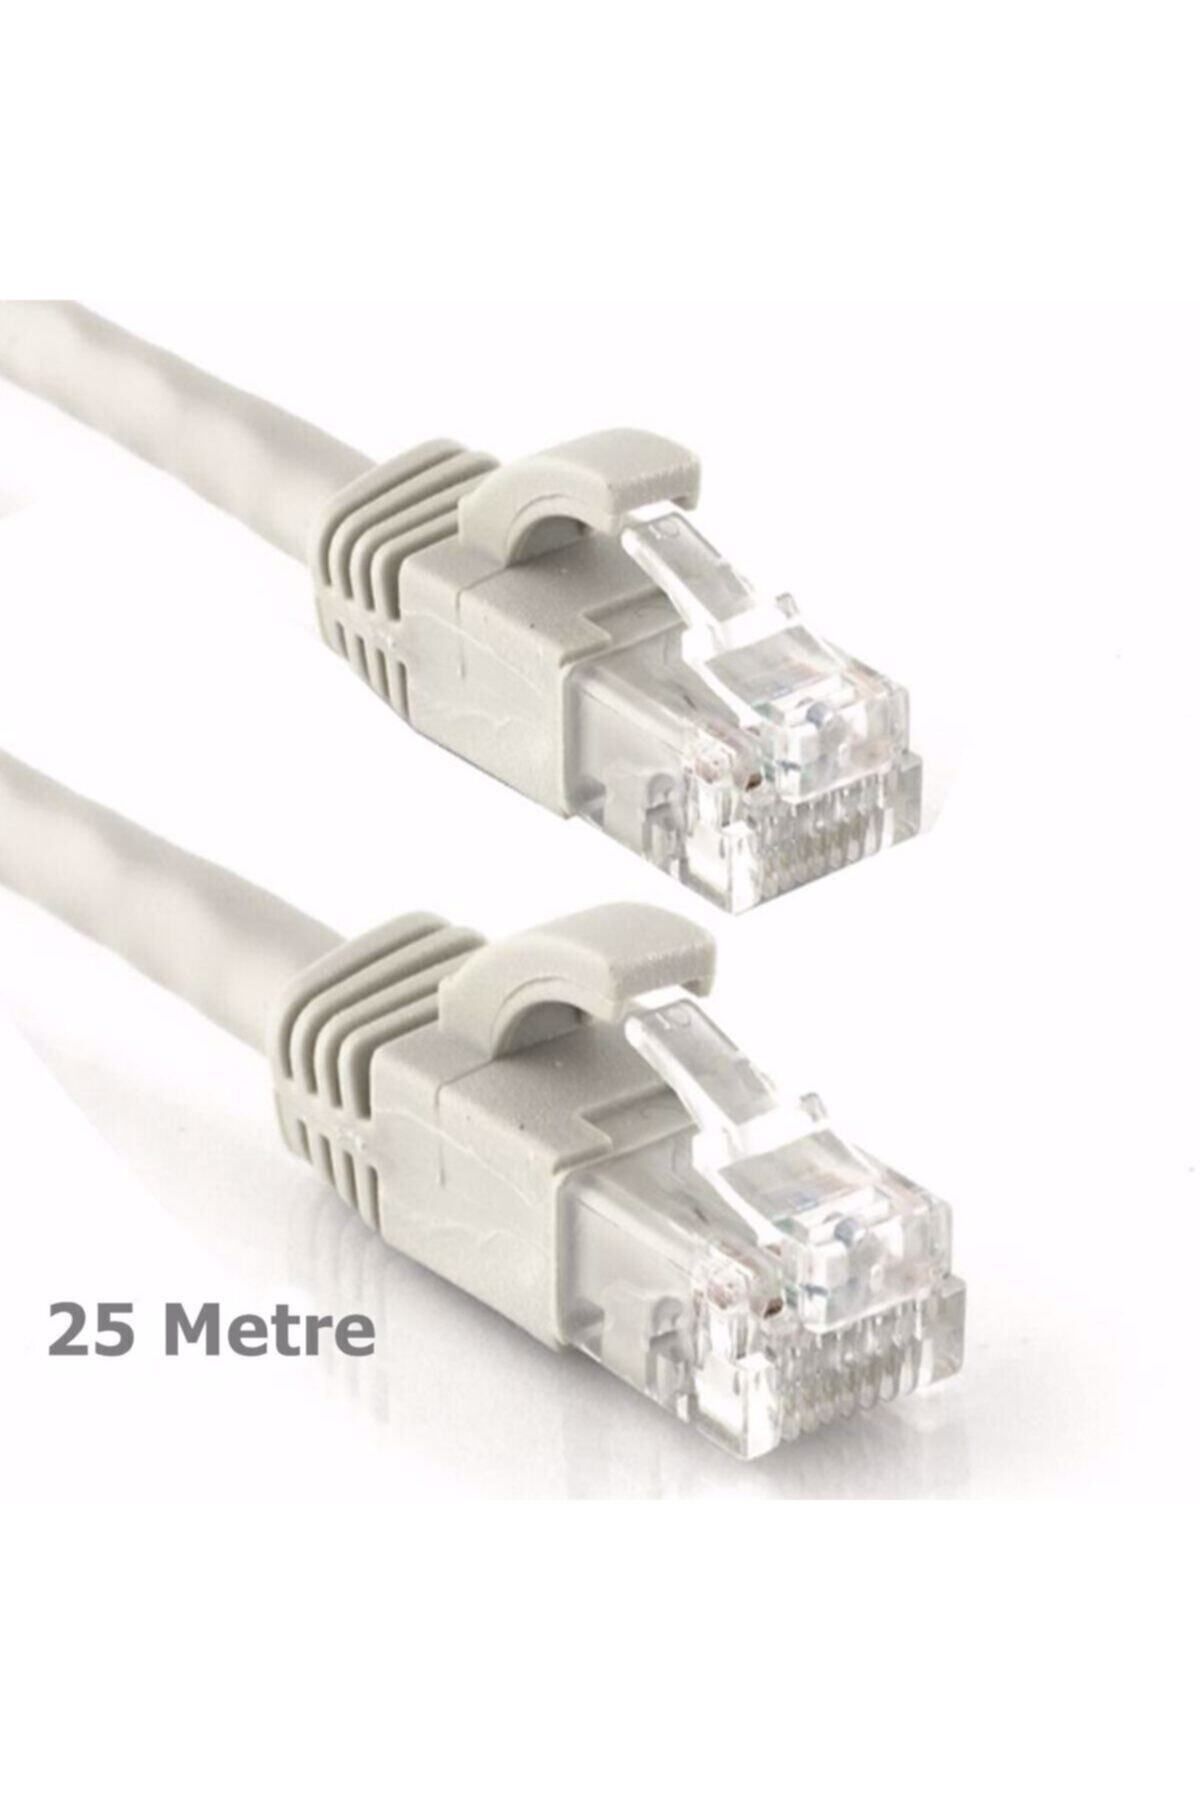 YILMART 25 Metre Cat 6 Fabrikasyon Internet Data Kablosu ( Rj45 Uc Ethernet Modem ) Yiltech-cat6